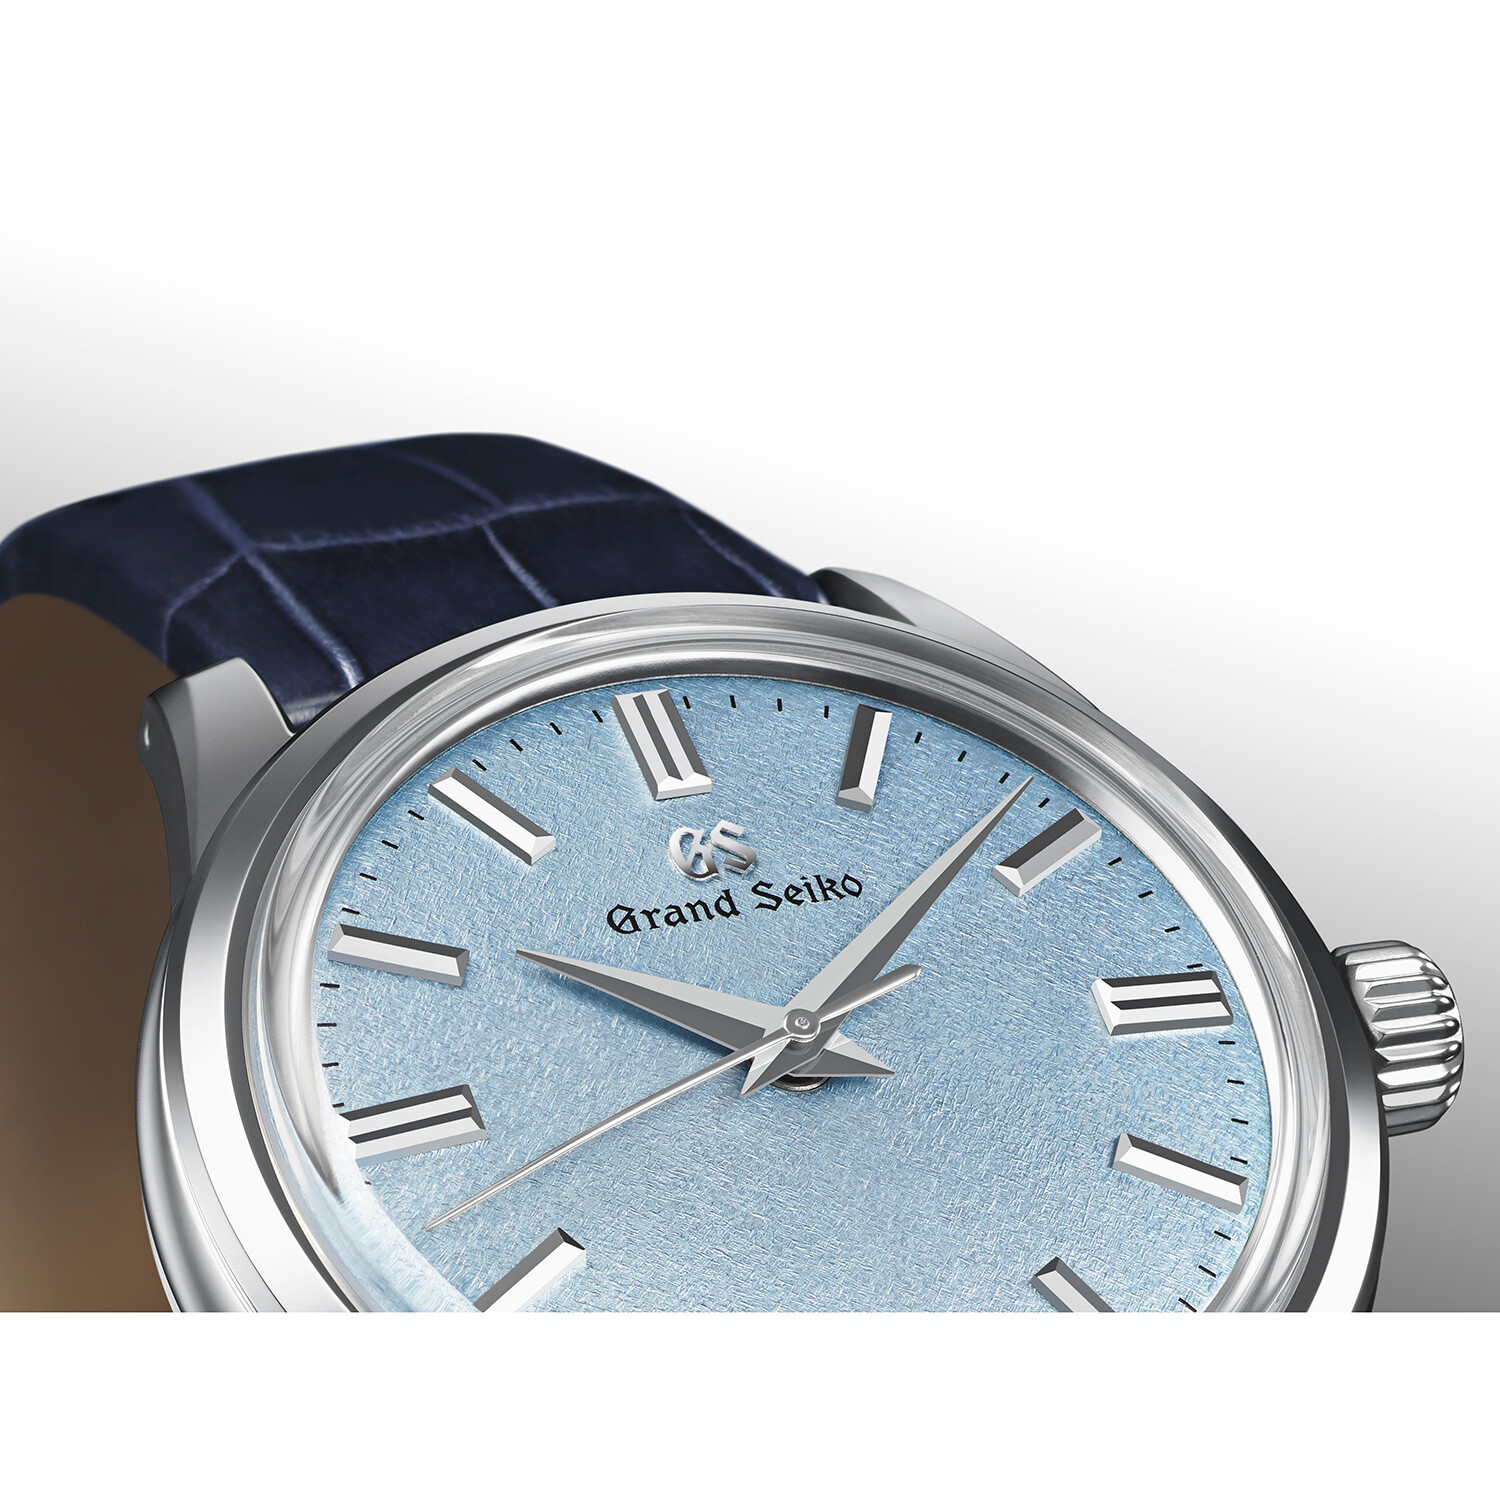 Purchase Grand Seiko Elégance SBGW283 watch